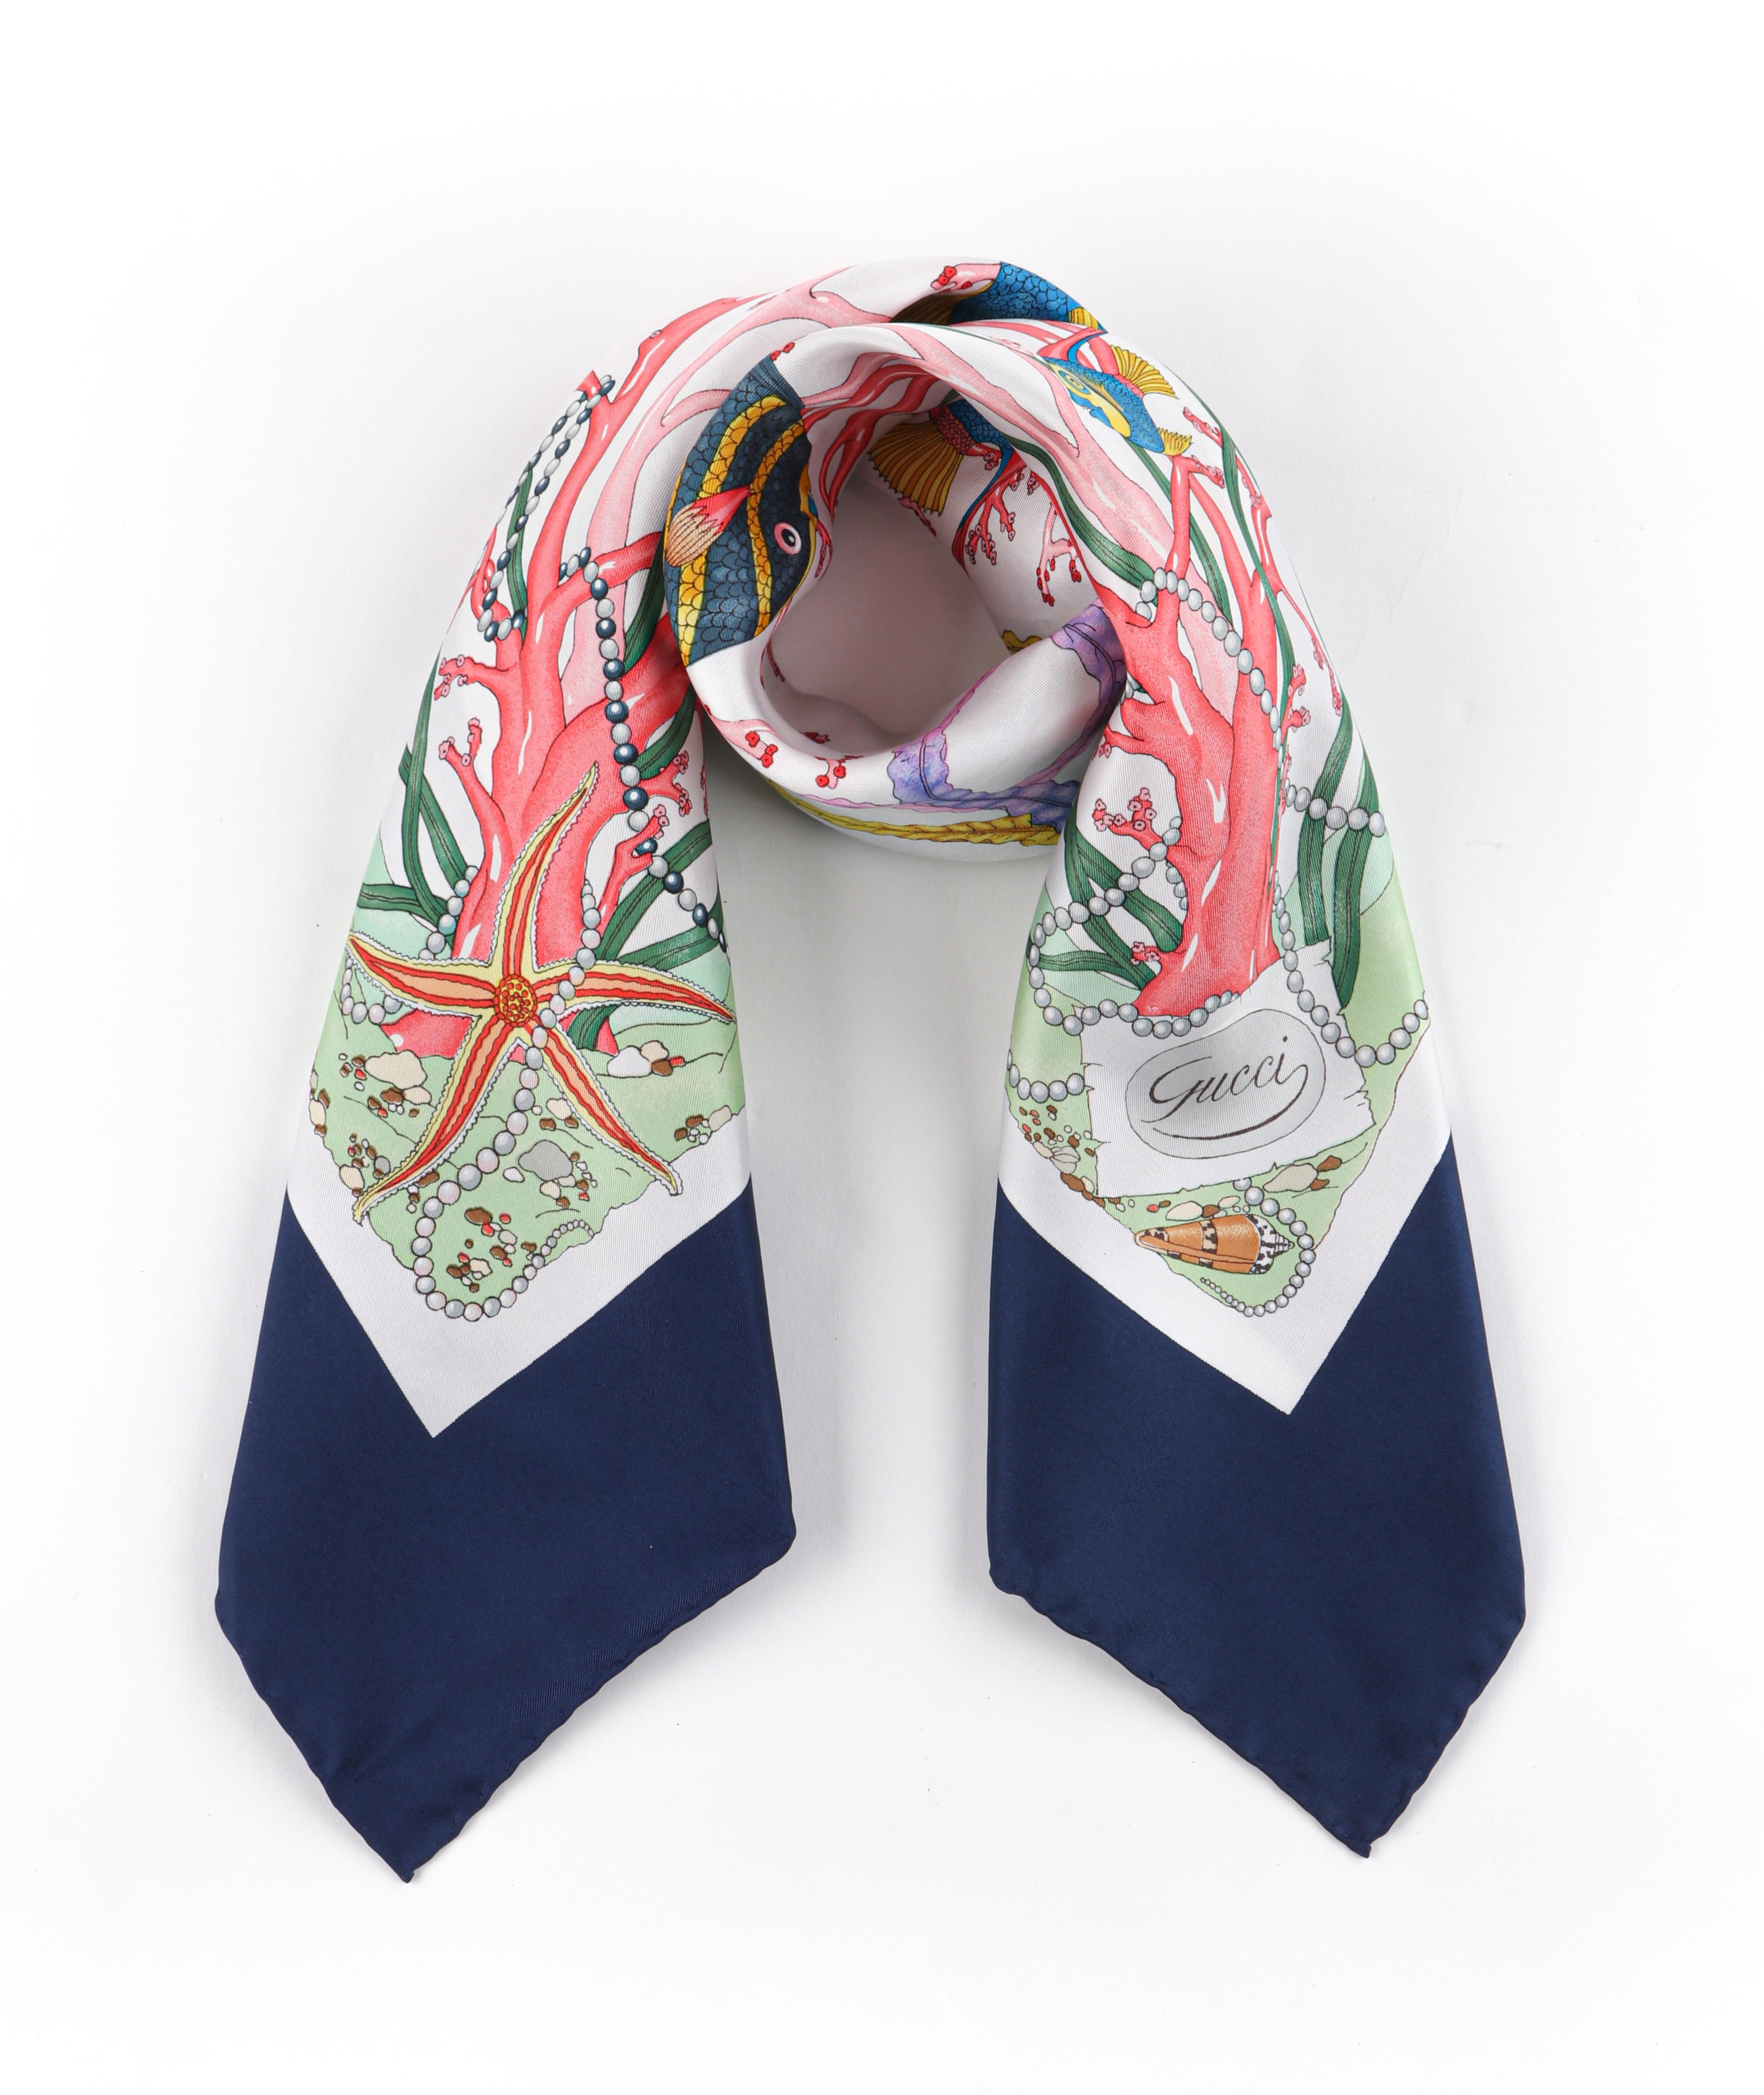 GUCCI Vittorio Accornero c.1960’s Blue Under the Sea Print Silk Square Scarf
 
Brand / Manufacturer: Gucci
Circa: 1960’s
Style: Square scarf
Color(s): Multicolor
Lined: No
Unmarked Fabric Content (feel of): 100% Silk
Additional Details / Inclusions: